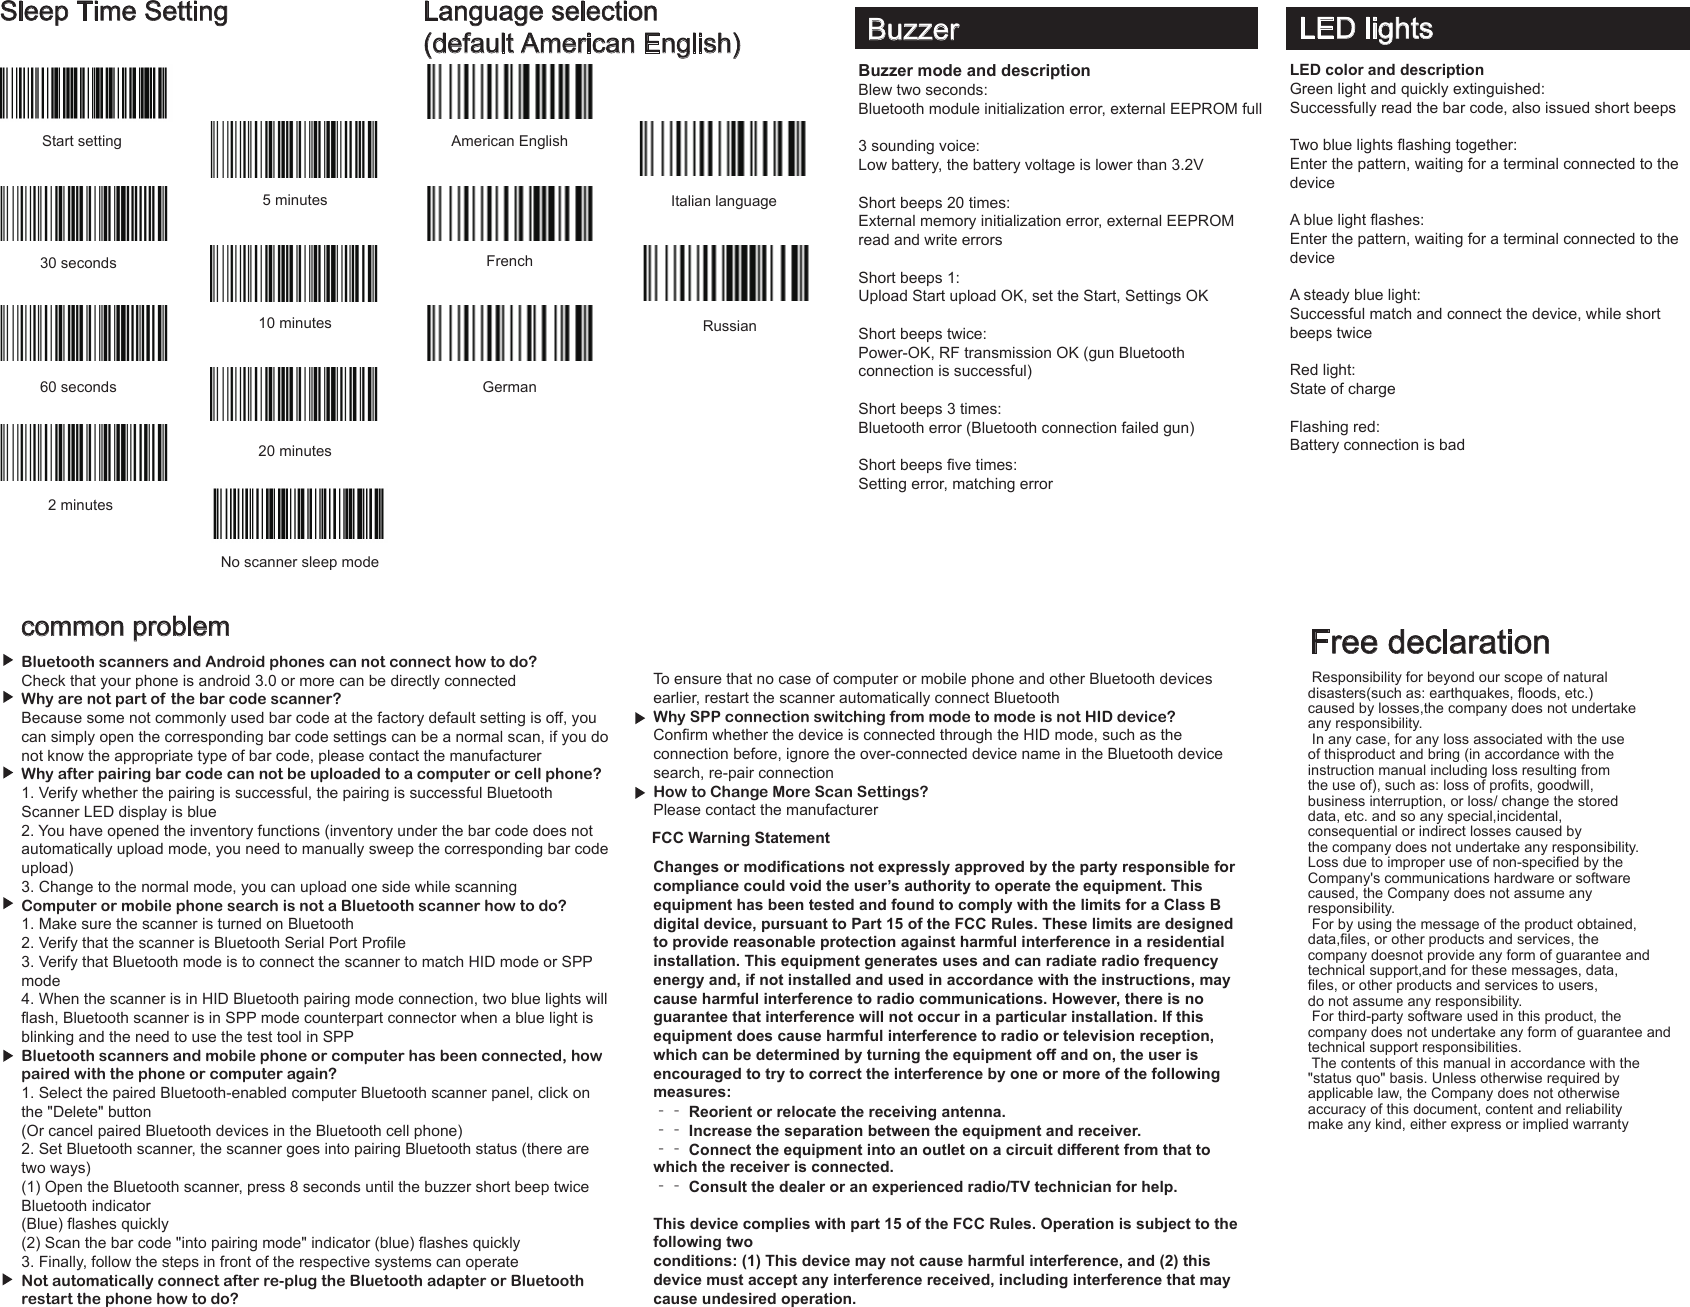 Bluetooth 2.4g wireless barcode scanner user manual software